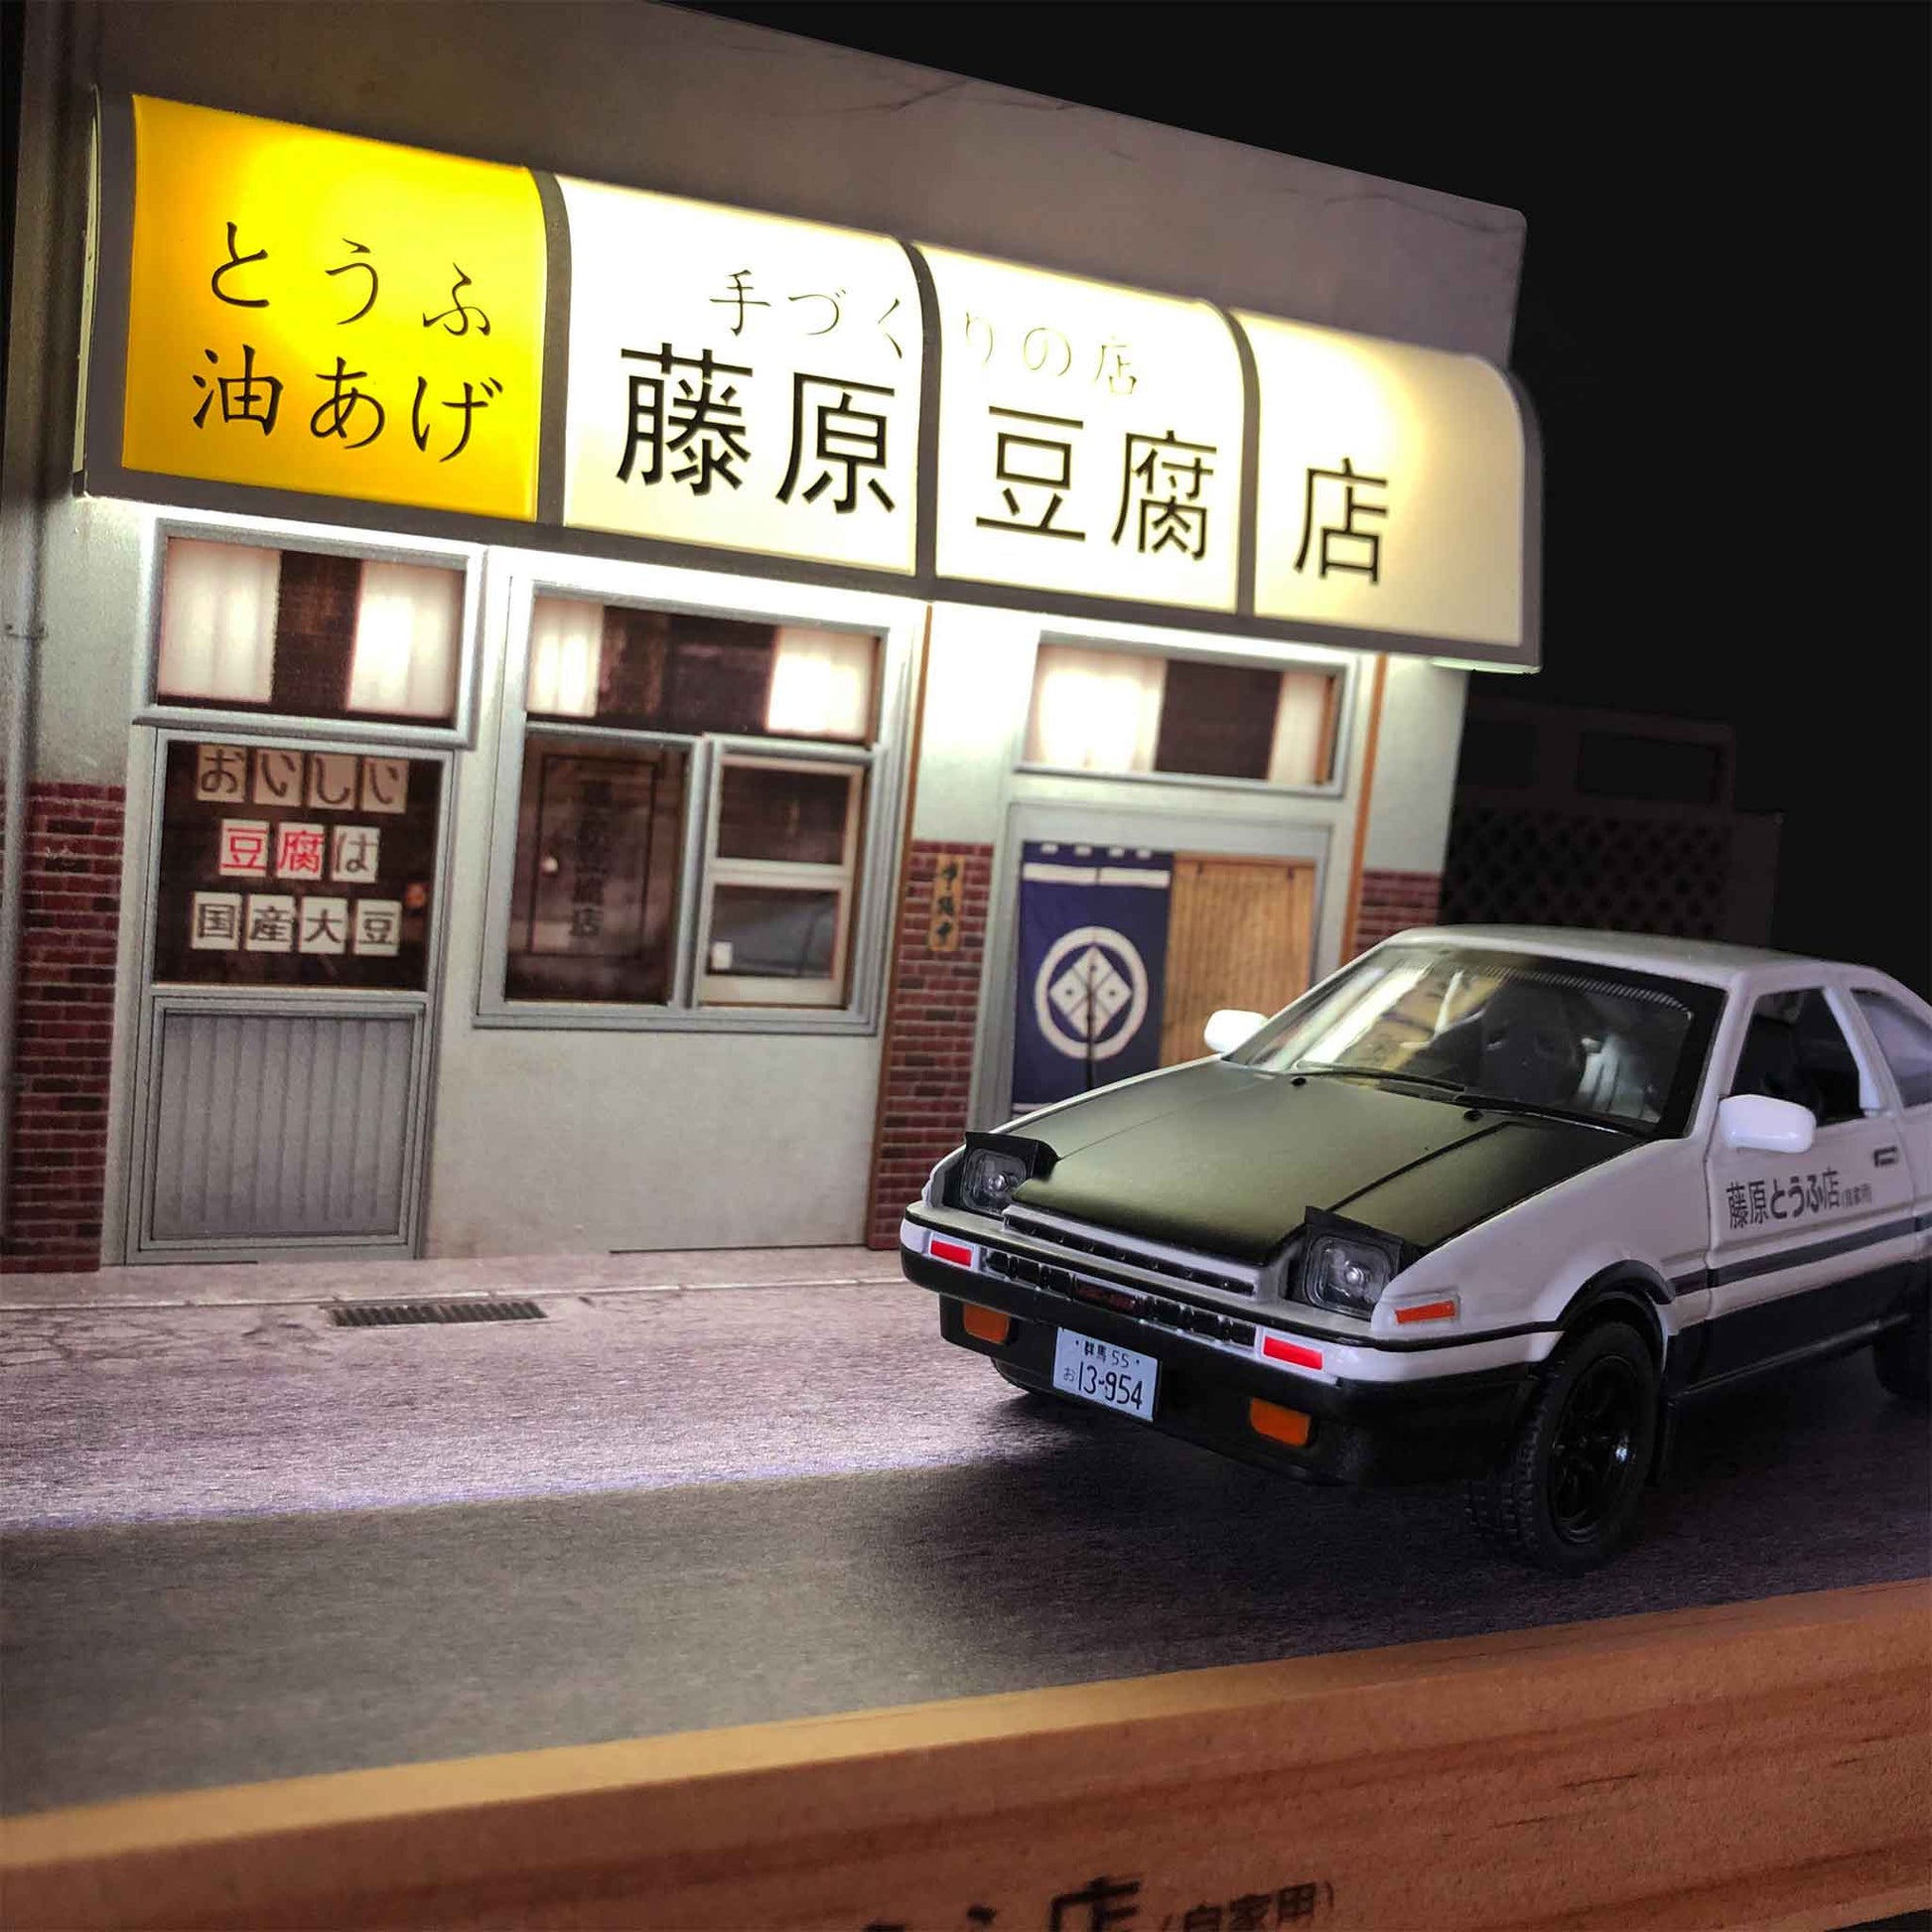 An AE86 car model in a Fujiwara tofu shop diorama with LED light on